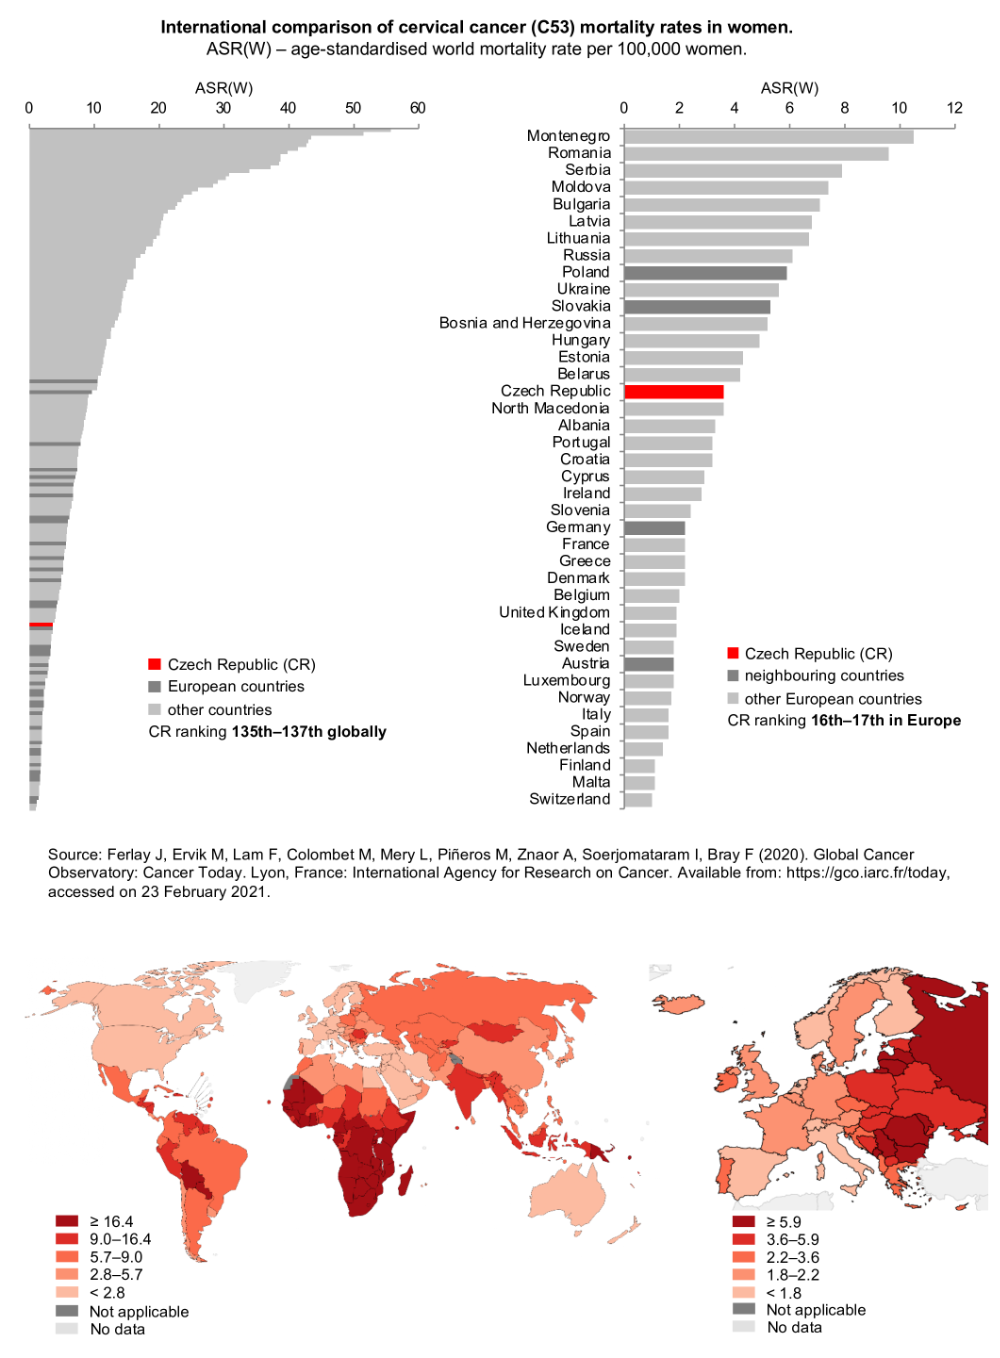 Figure 4: International comparison of cervical cancer (C53) mortality rates. ASR(W) – age-standardised world mortality rate per 100,000 women. Source: GLOBOCAN 2018